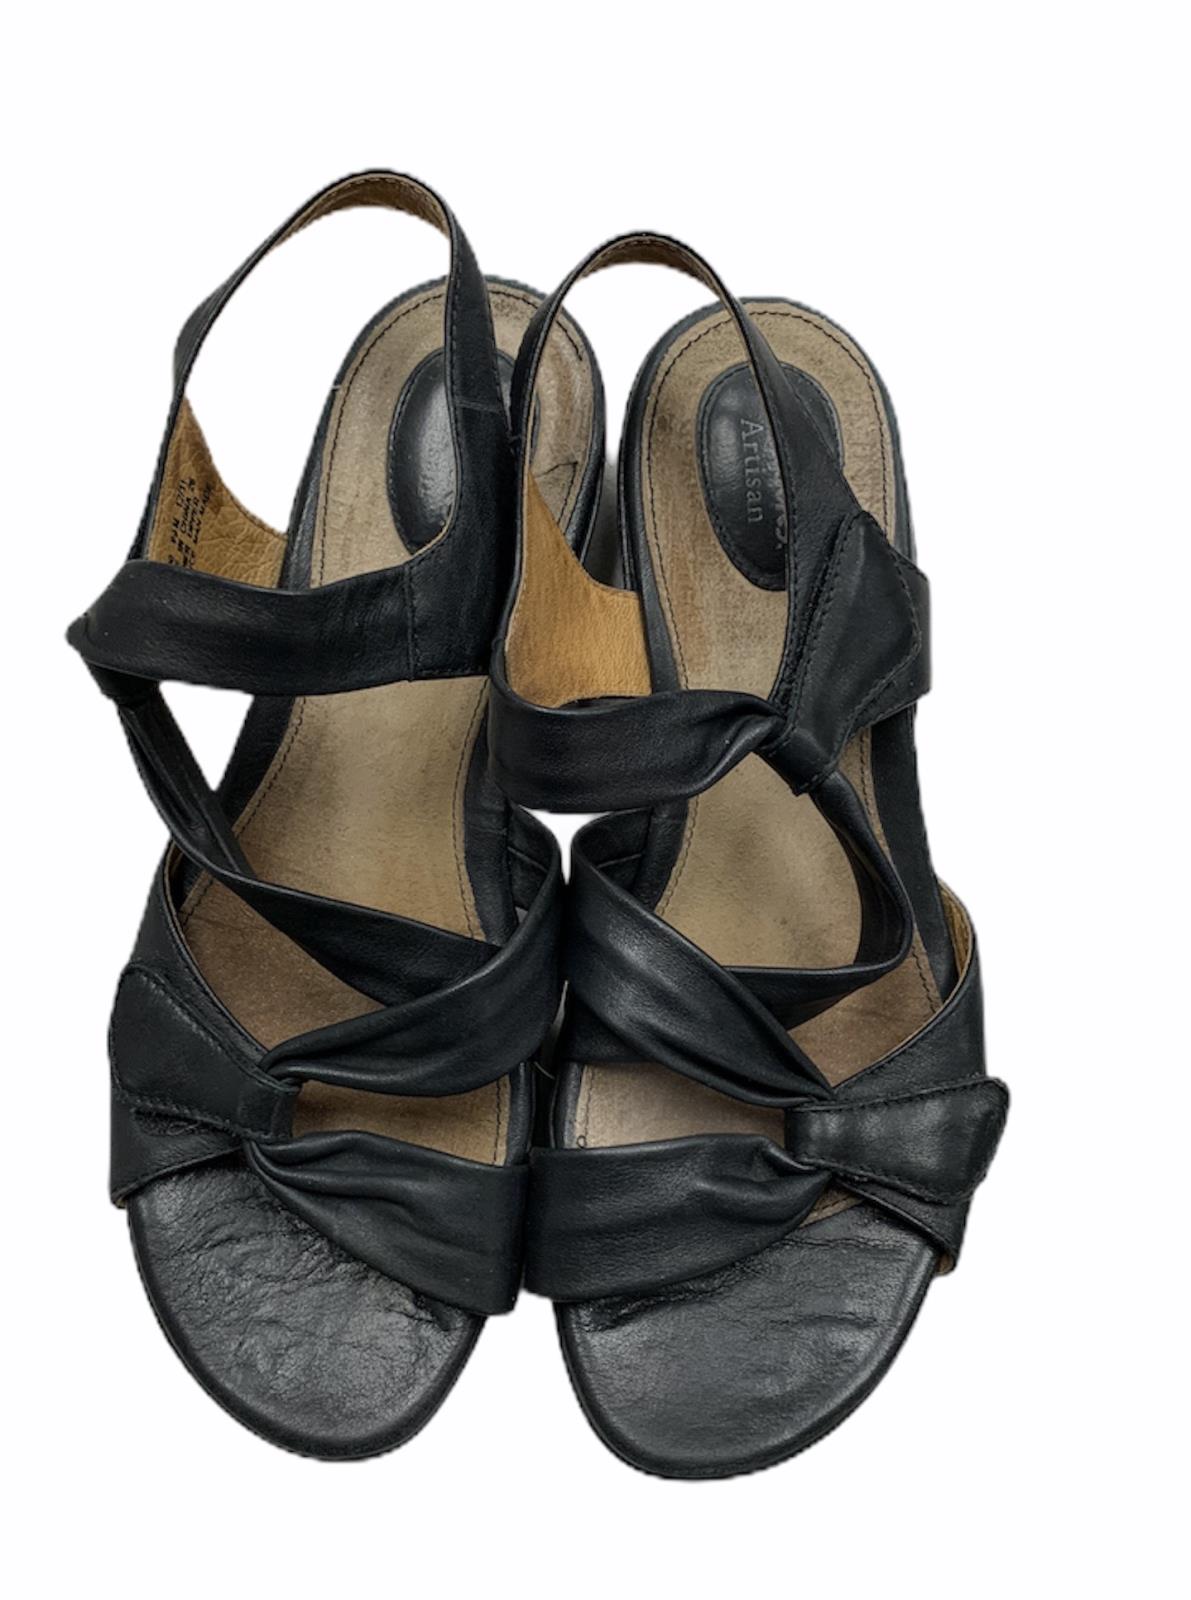 Clarks Artisan Lucena Twist Sandals Comfort Leather Ankle Strap Black ...